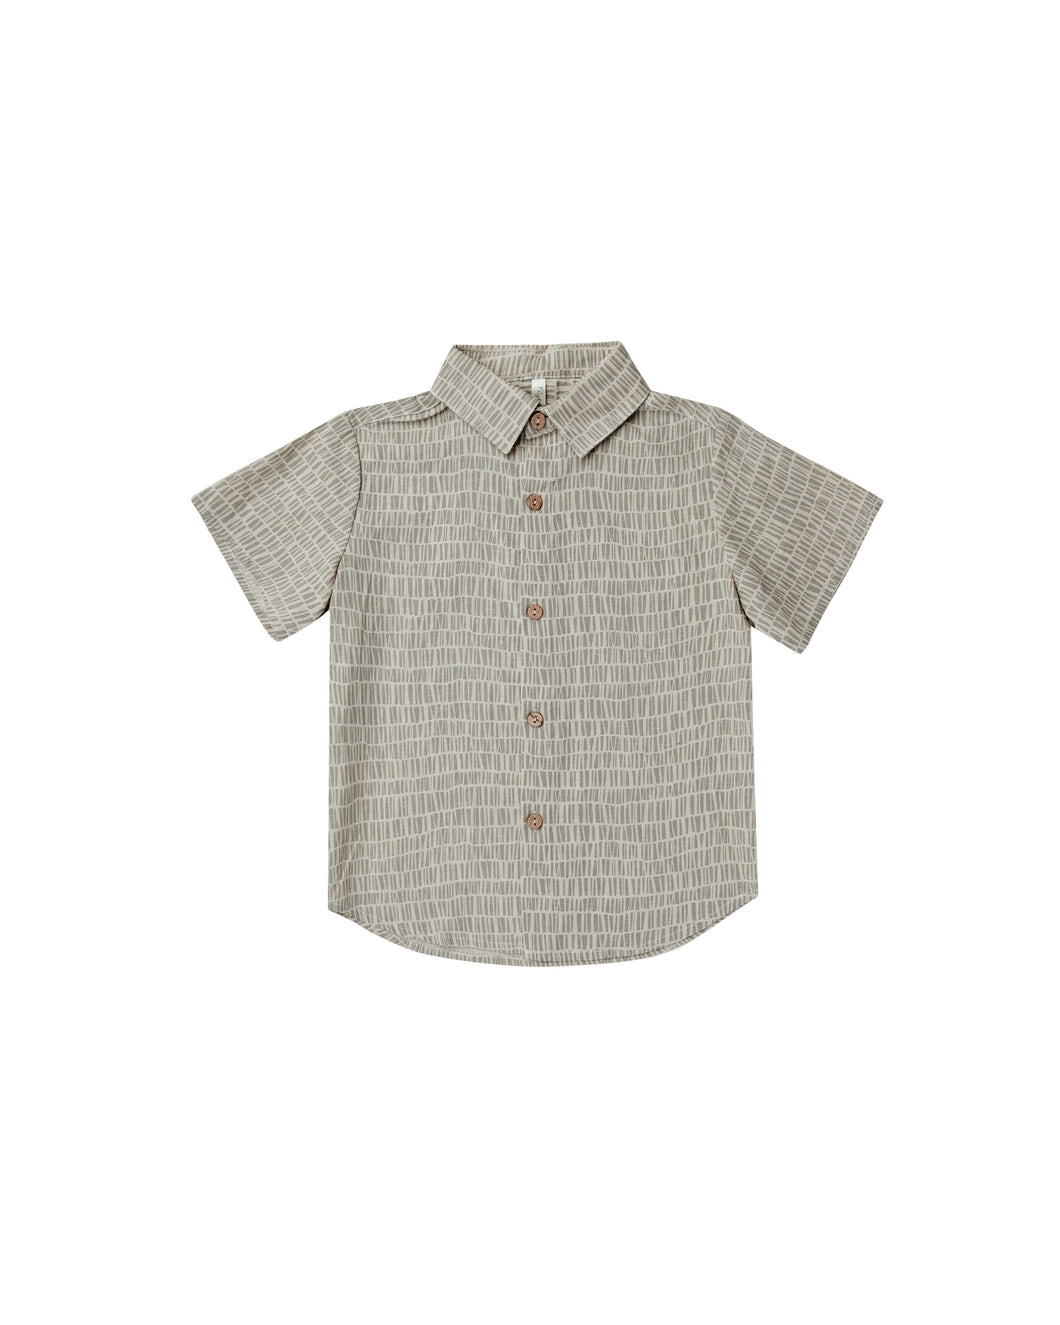 Collared Short Sleeve Shirt - Block Stripe - SIZE 8/9 YR